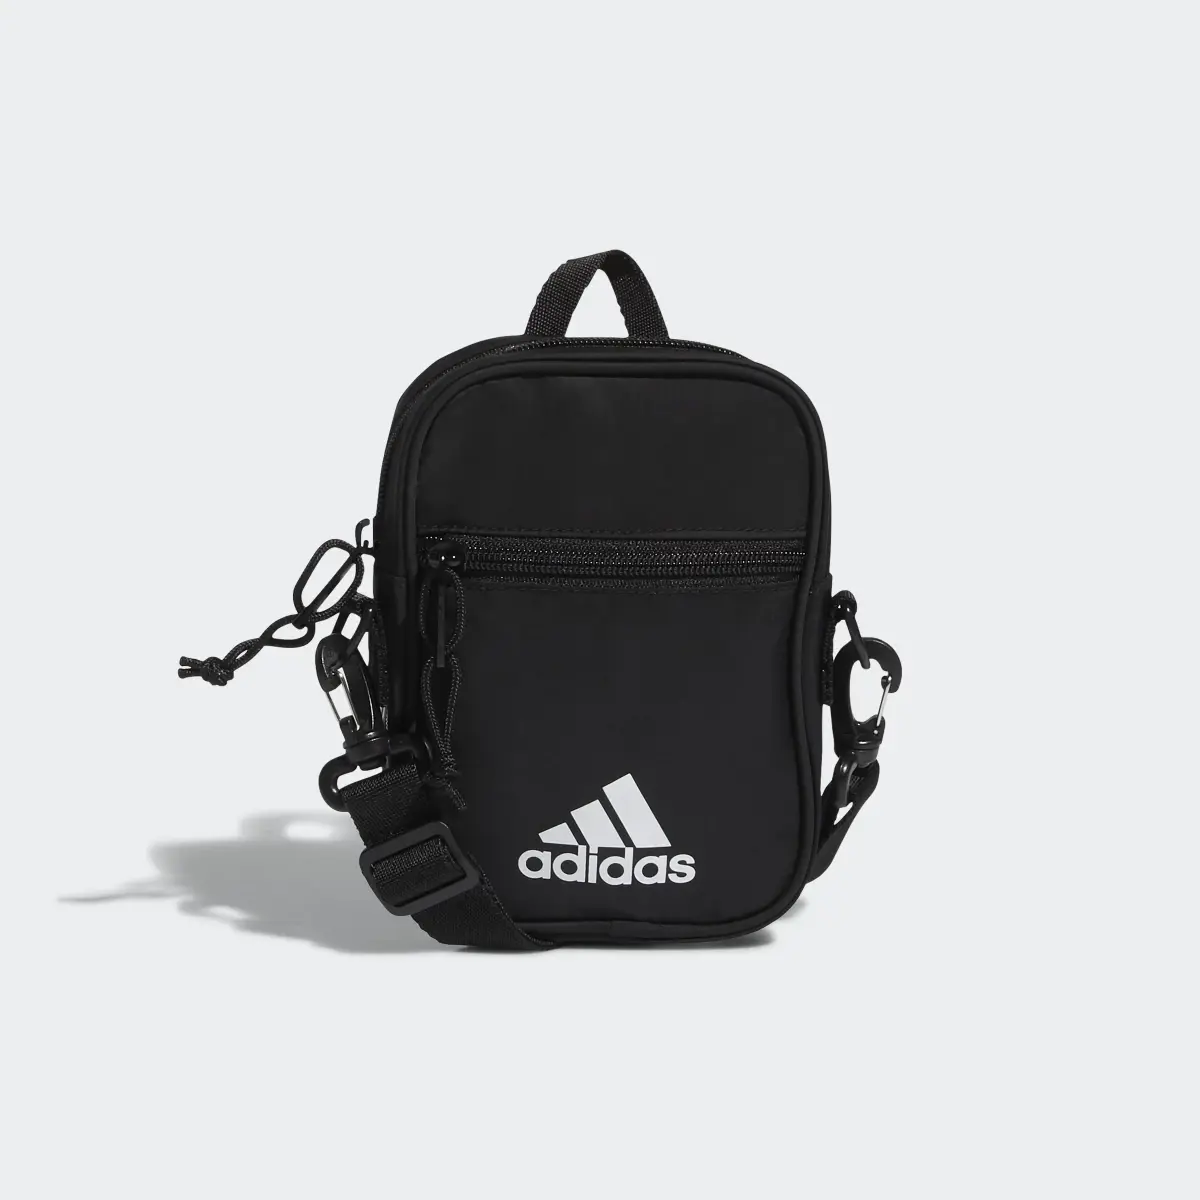 Adidas Must Have Festival Crossbody Bag. 2